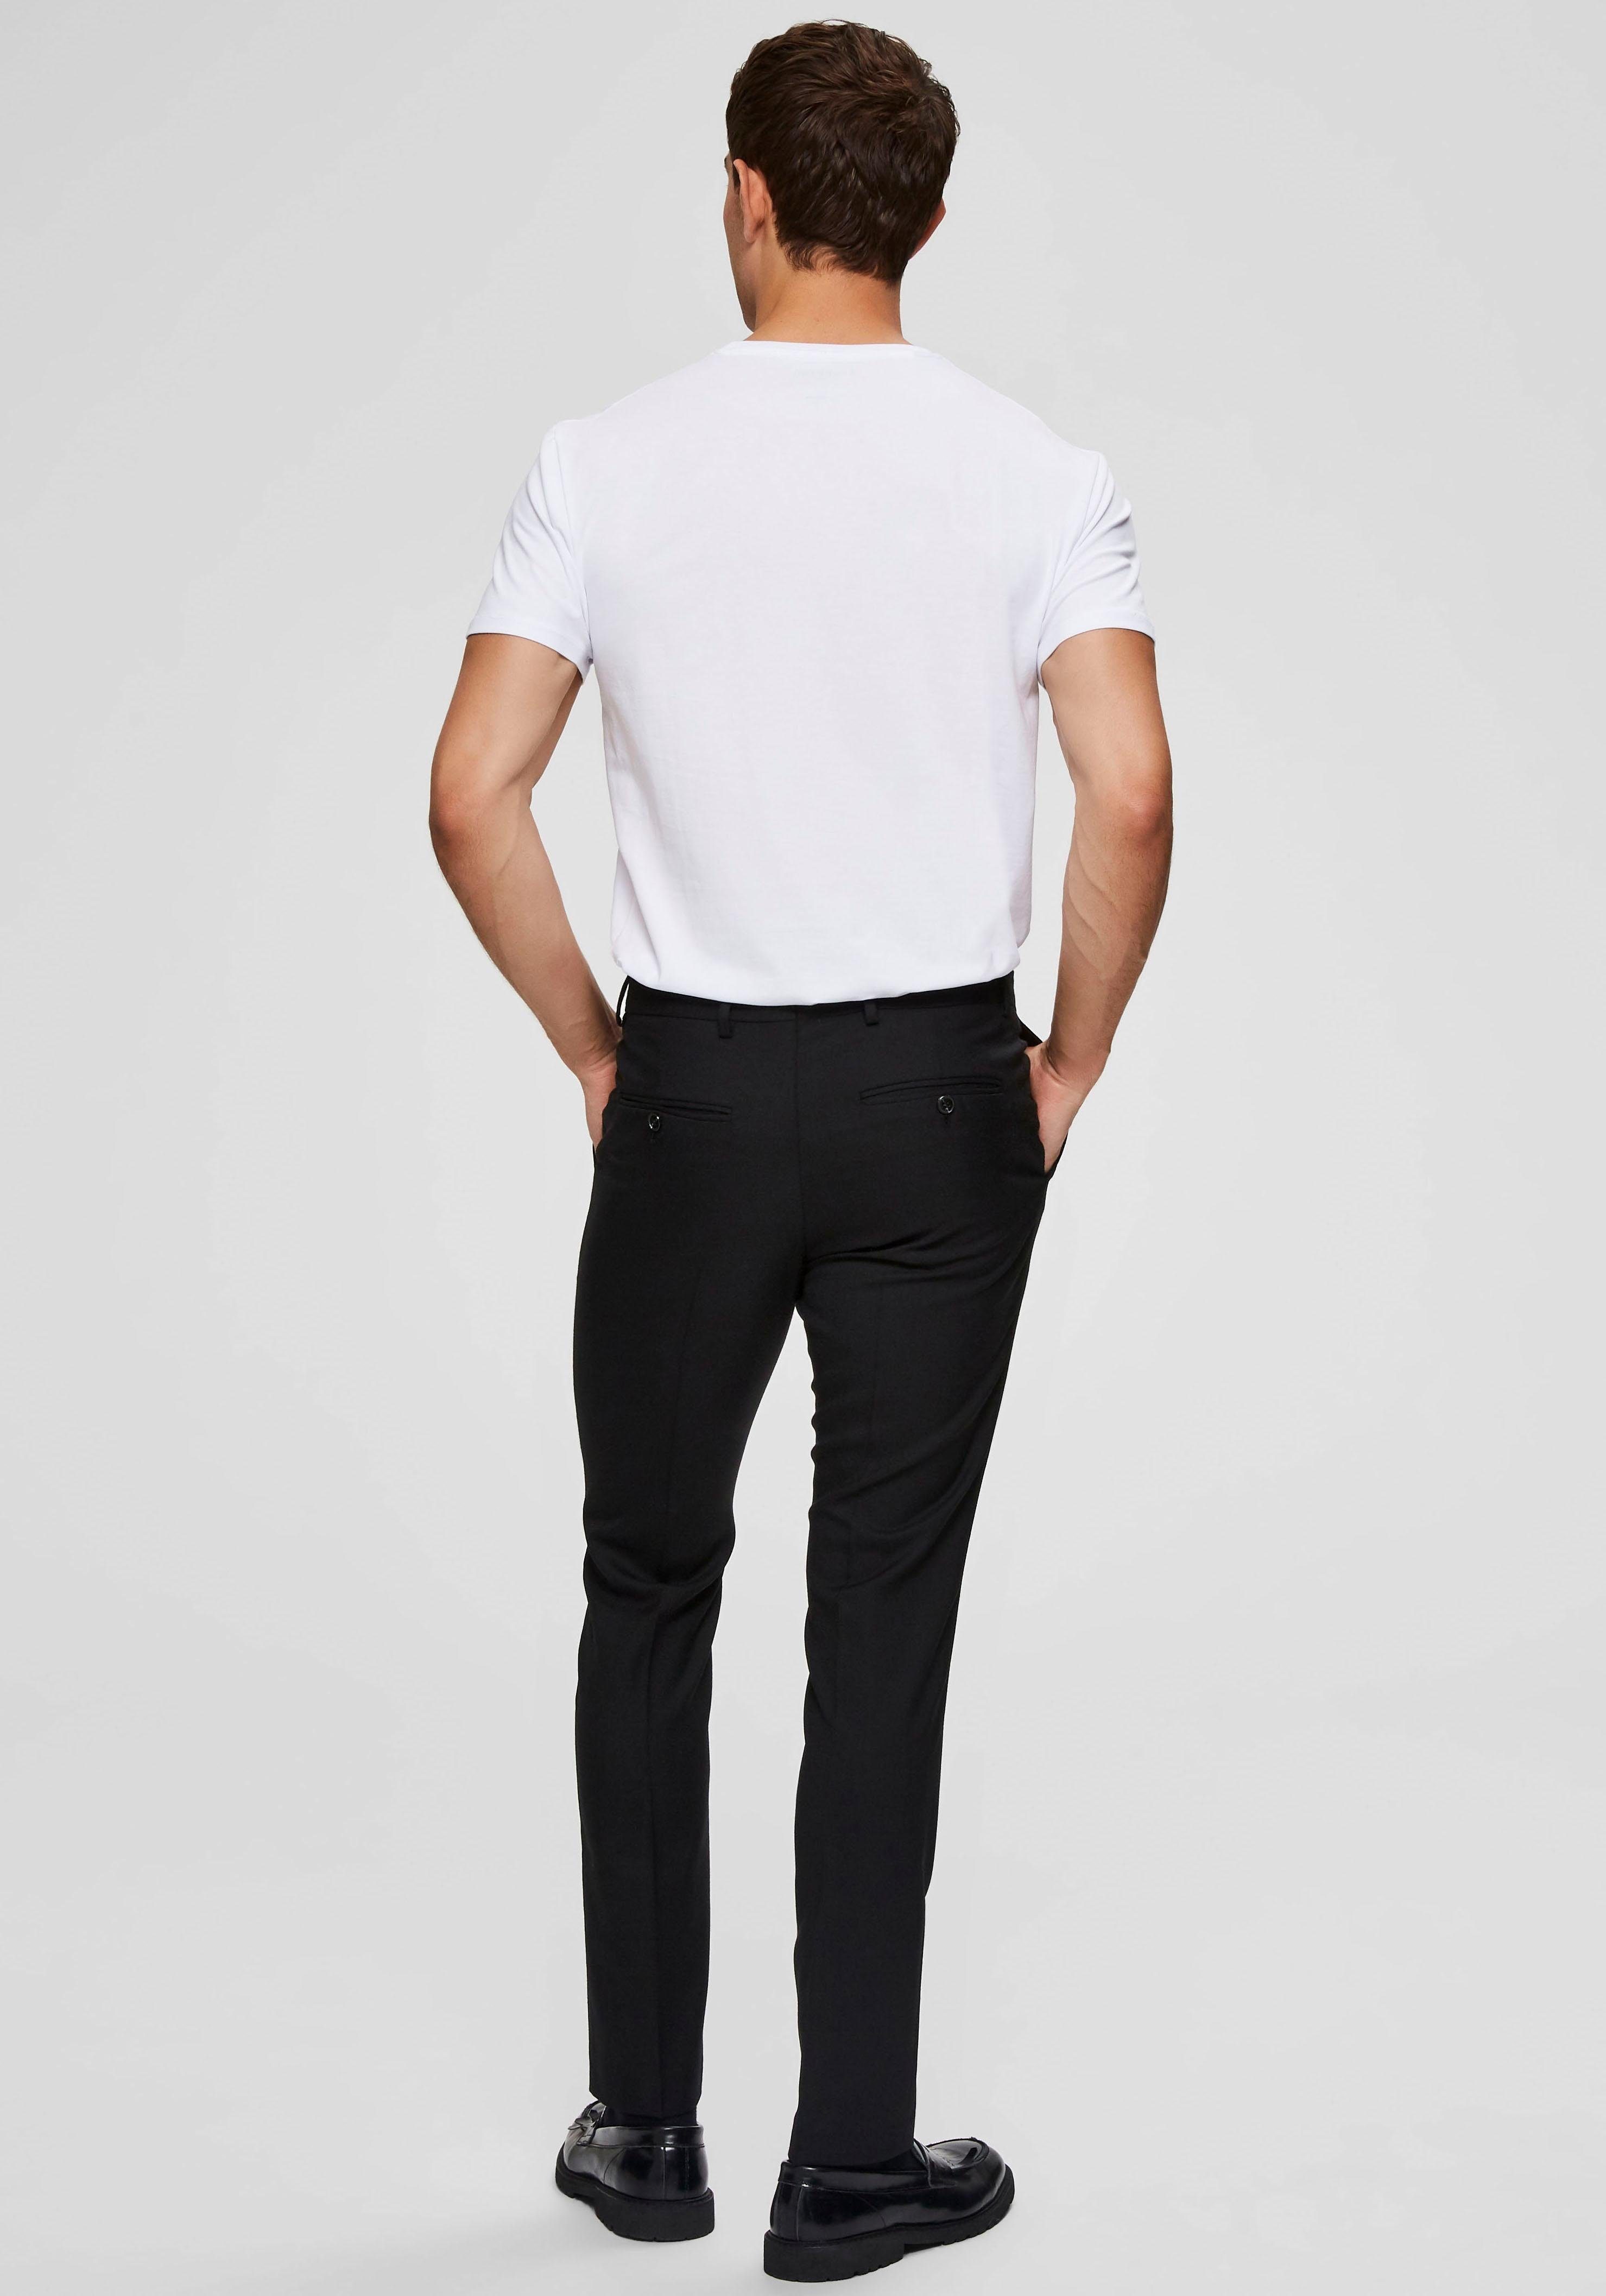 HOMME White Basic SELECTED Rundhalsshirt Bright T-Shirt